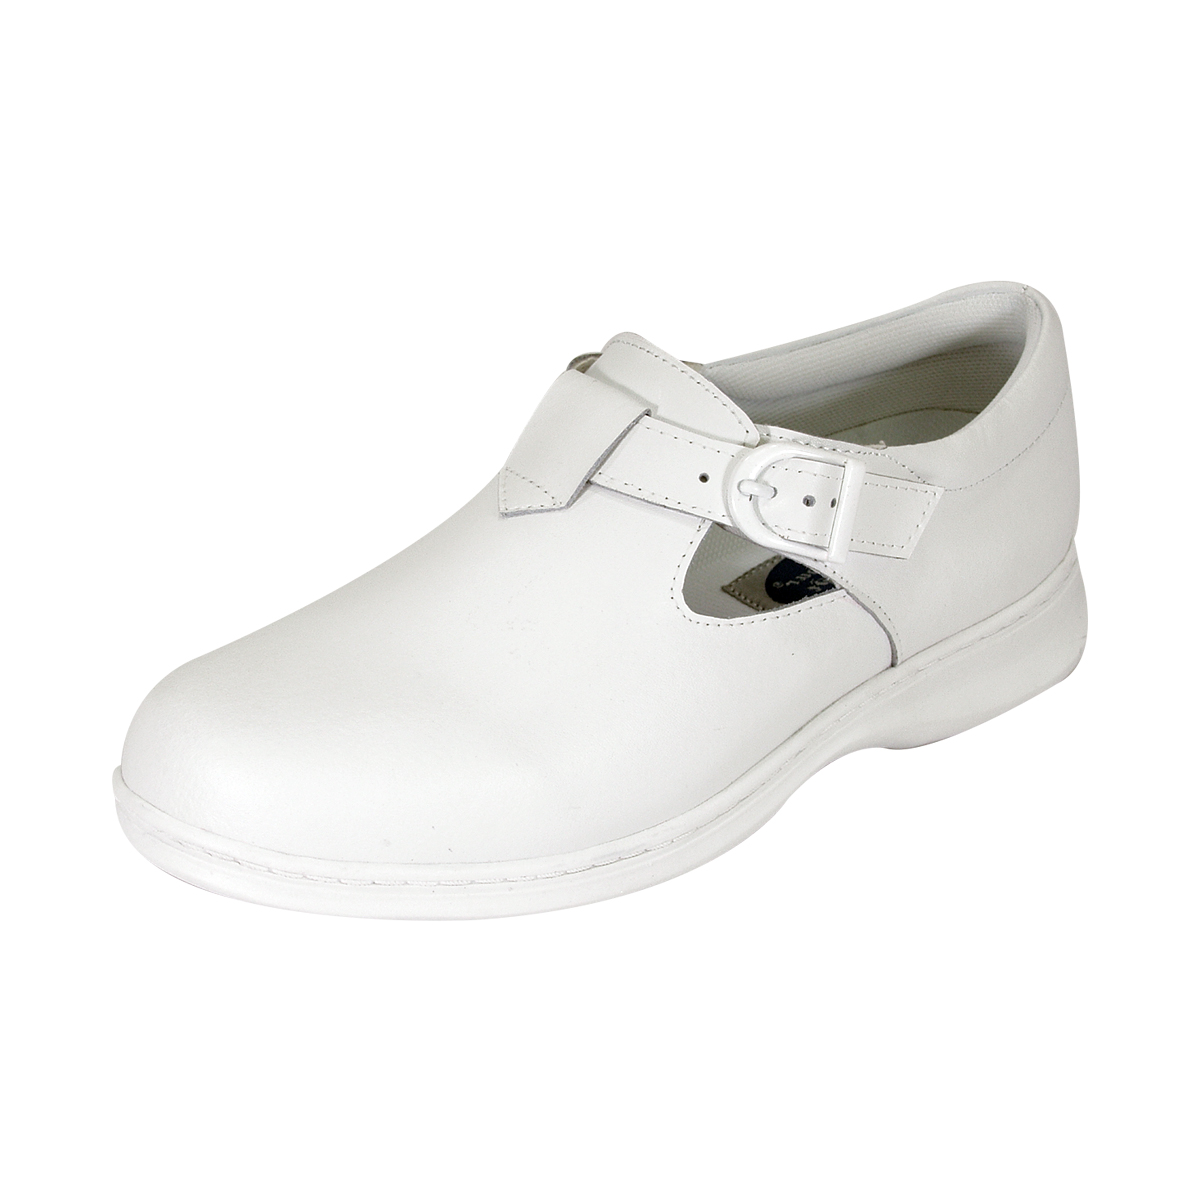 24 HOUR COMFORT Willa Wide Width Professional Sleek Shoe WHITE 5.5 - image 1 of 7